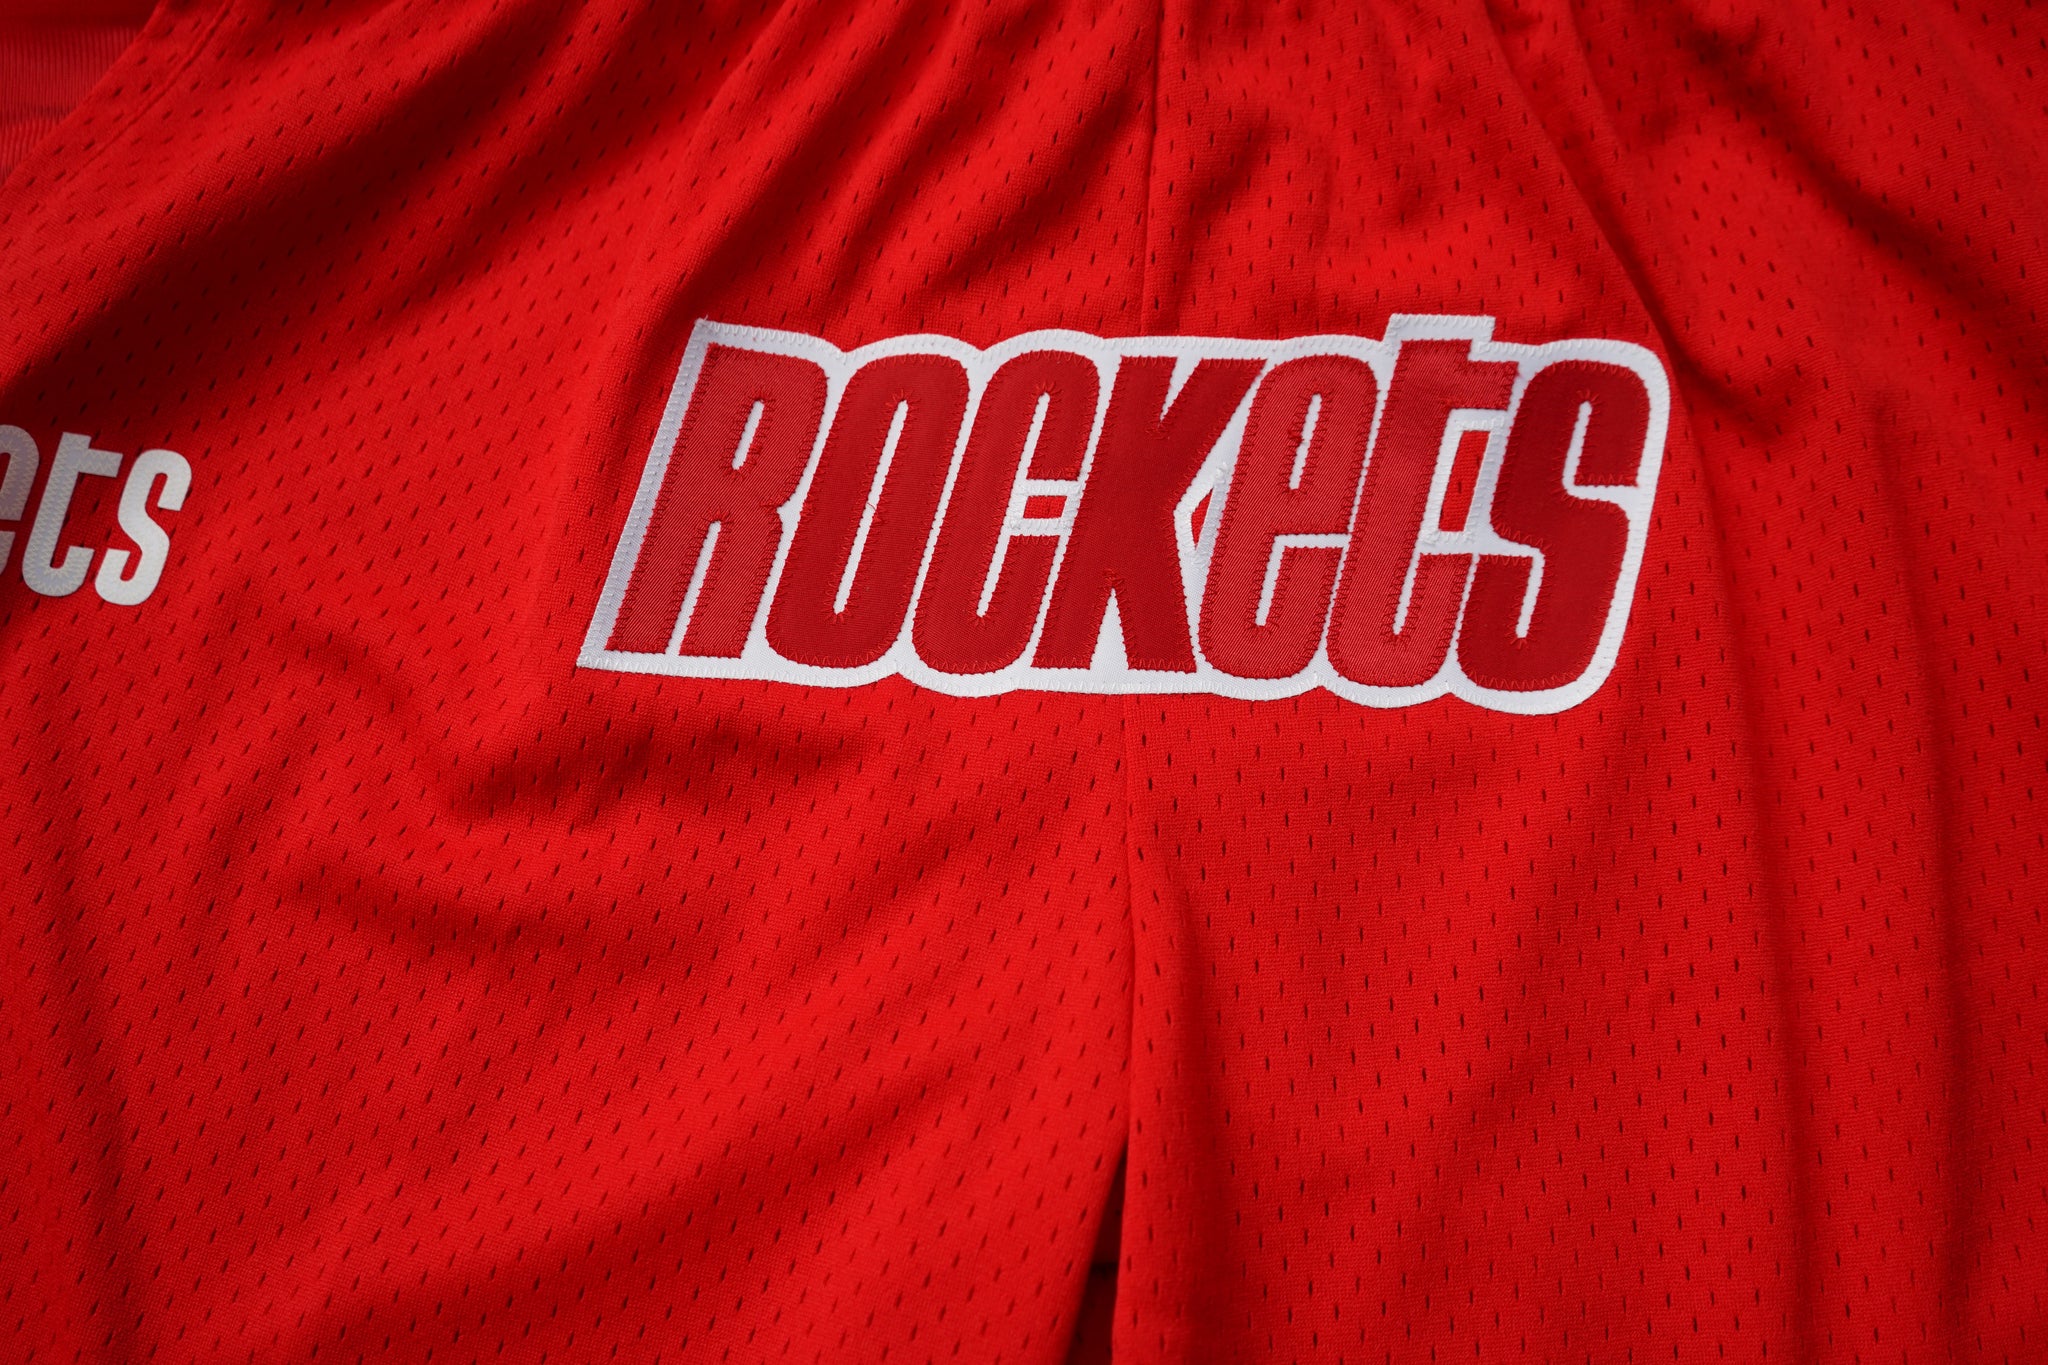 Mitchell & Ness Houston Rockets 1993-1994 "Rockets" Swingman Shorts